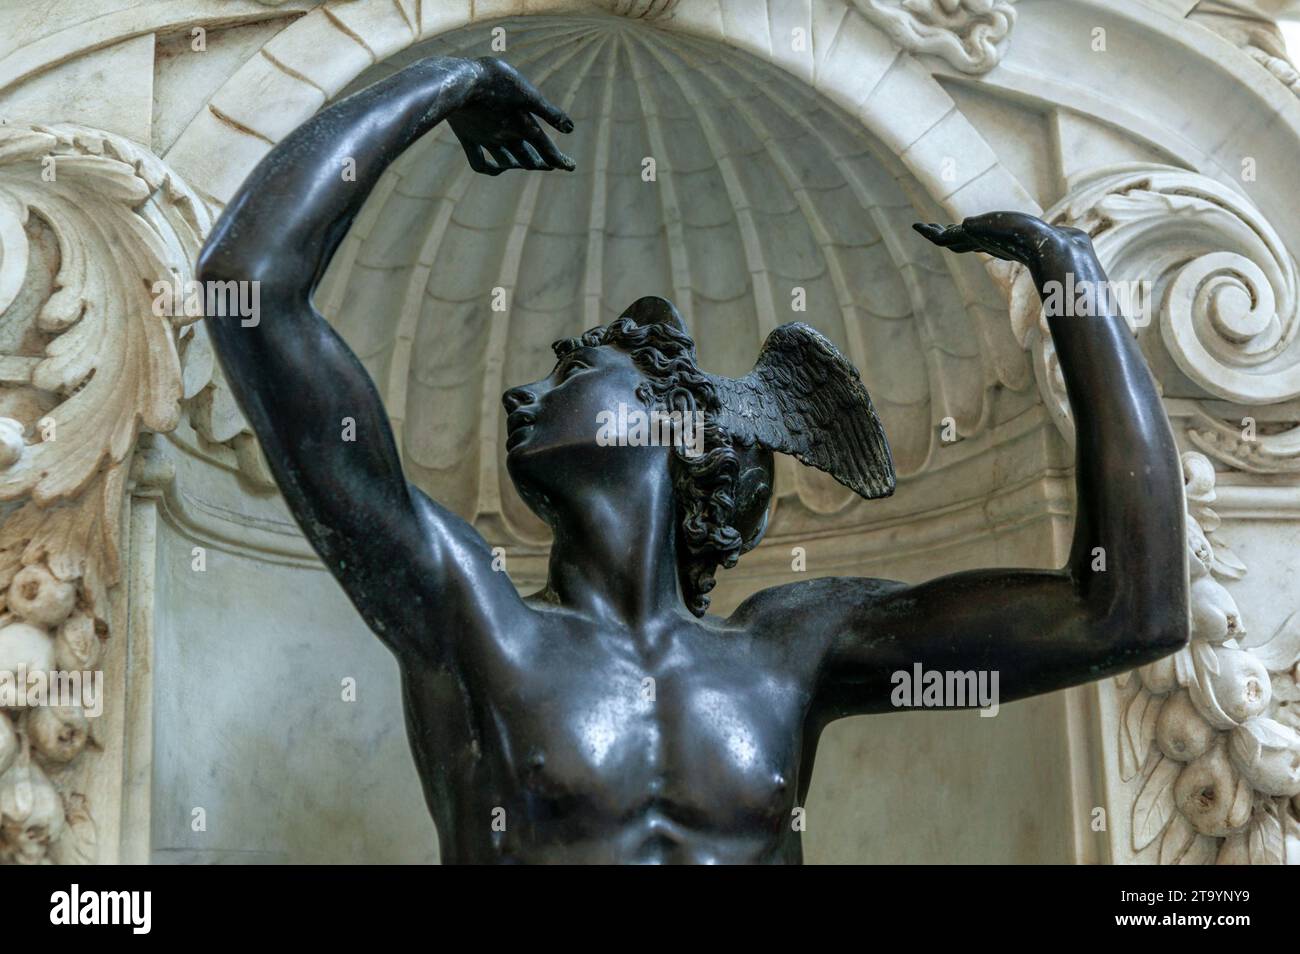 Loggia della Signoria oder dei Lanzi, Detail der Bronzestatue des Quecksilbers. Oper von Benvenuto Cellini. Florenz, Toskana, Italien, Europa Stockfoto